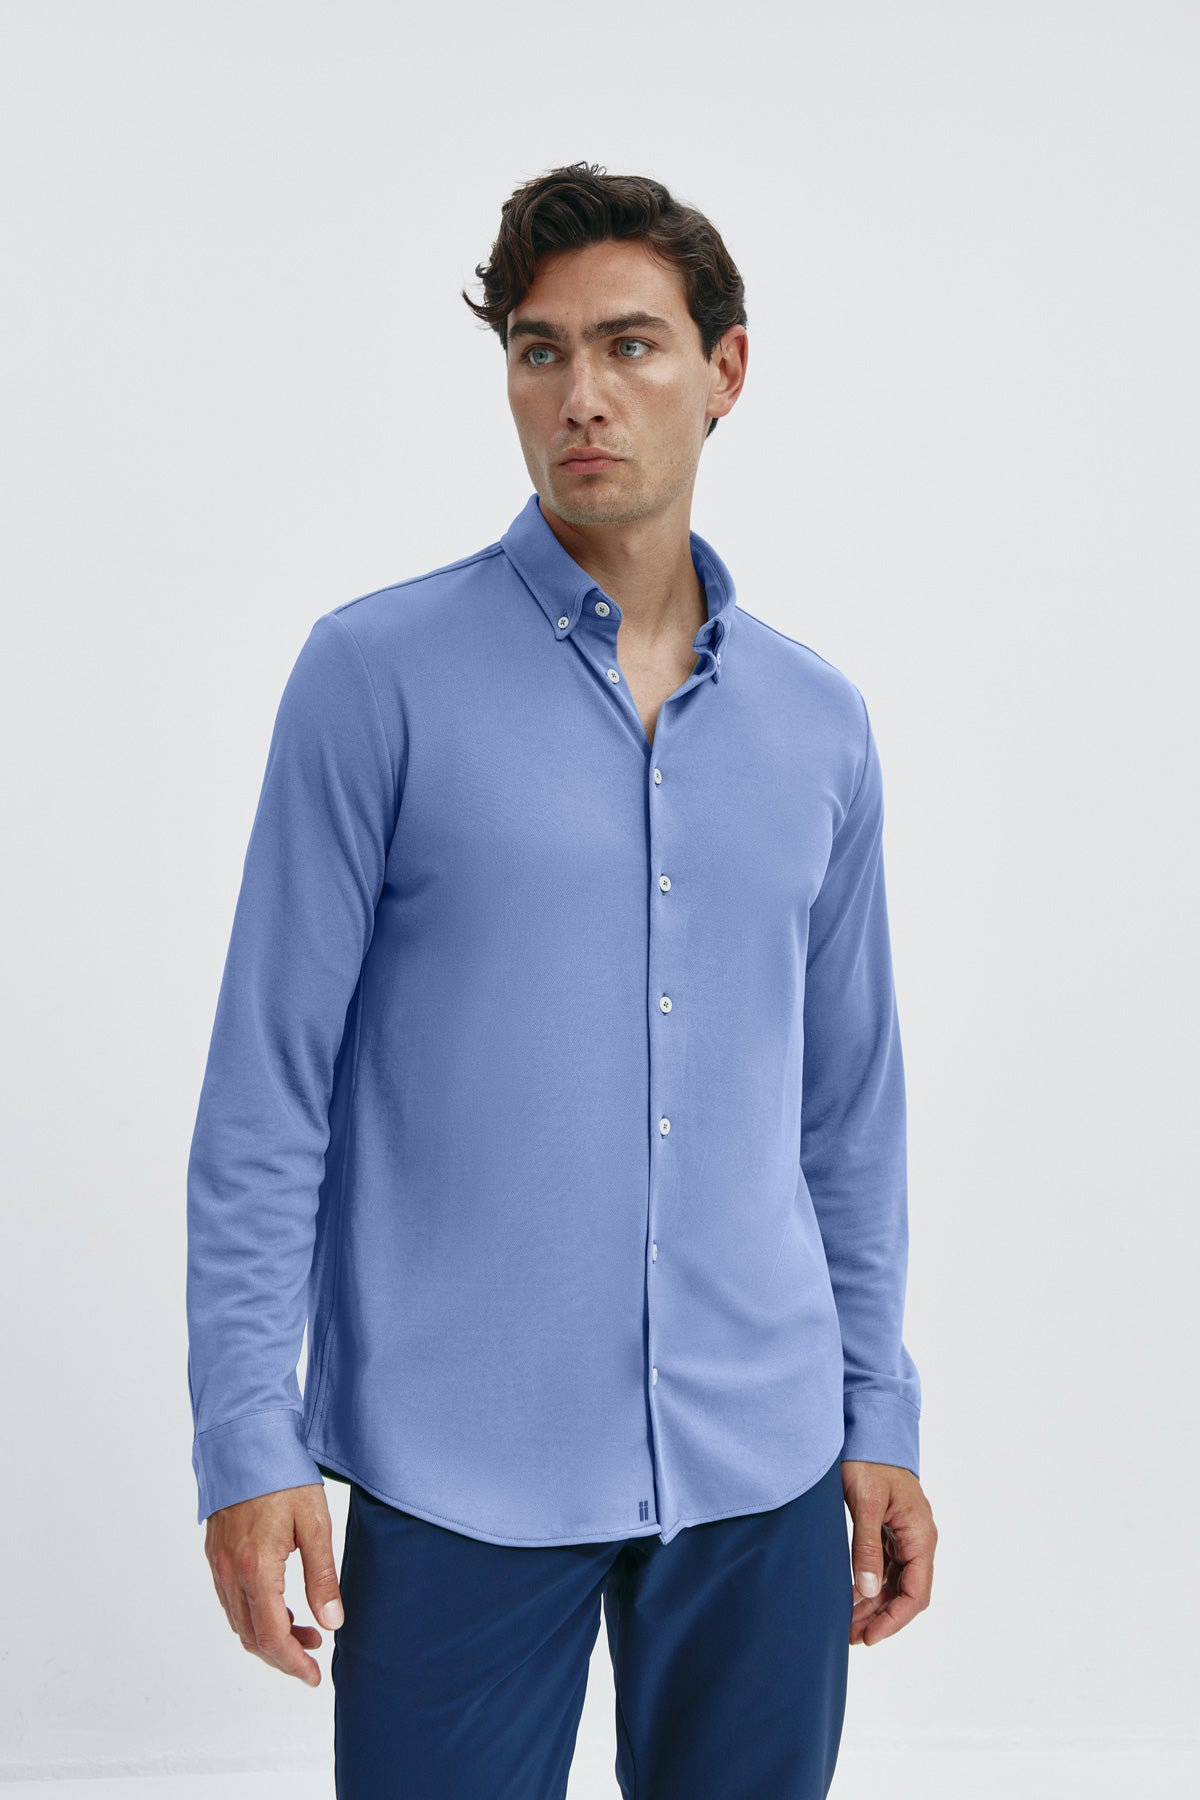 Camisa casual Azul acero para hombre sin arrugas ni manchas. Manga larga, antiarrugas y antimanchas. Foto frente